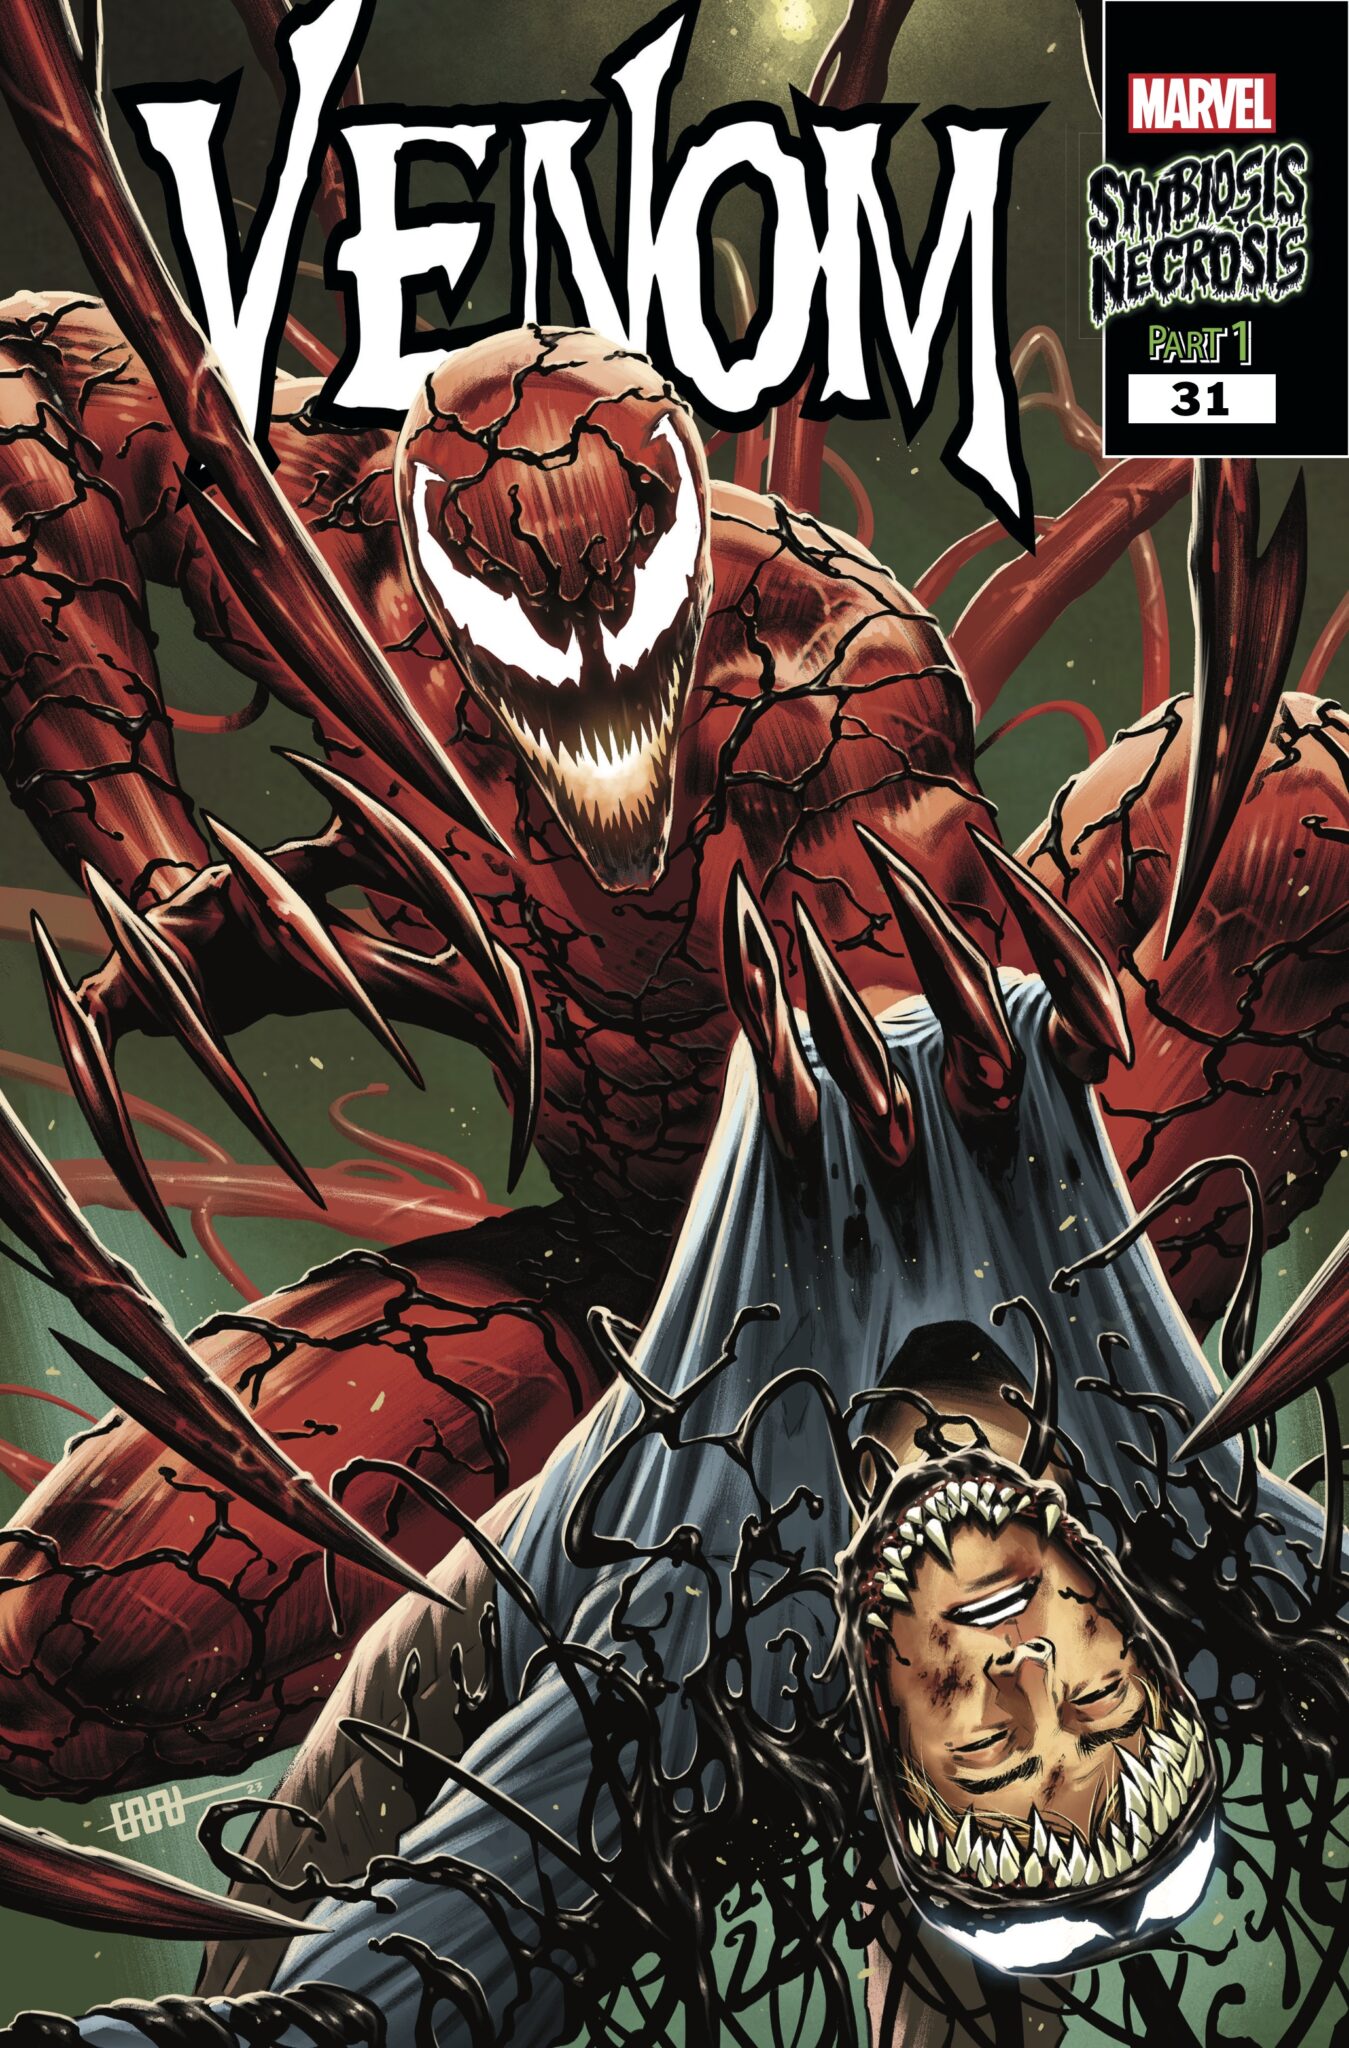 Symbiosis Necrosis Venom #31 cover